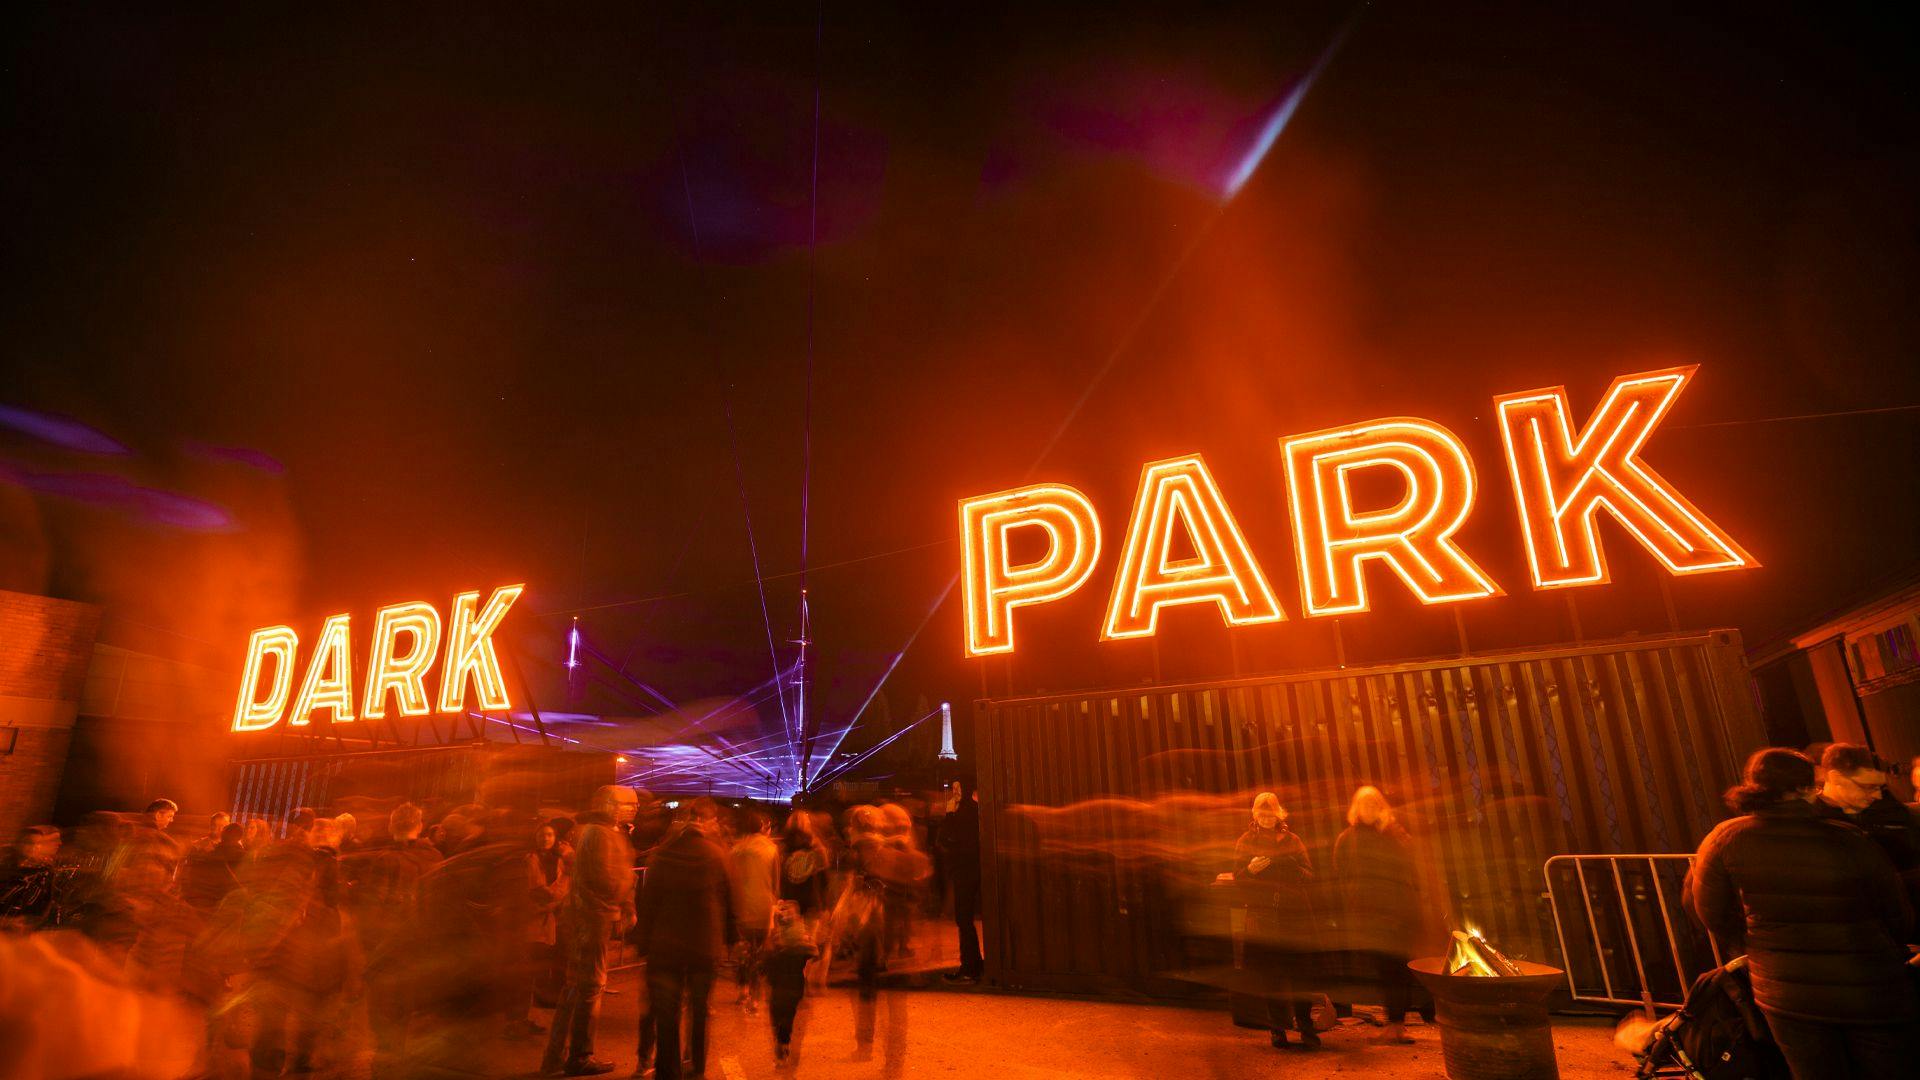 Dark Park entry signage, huge neon red letters.